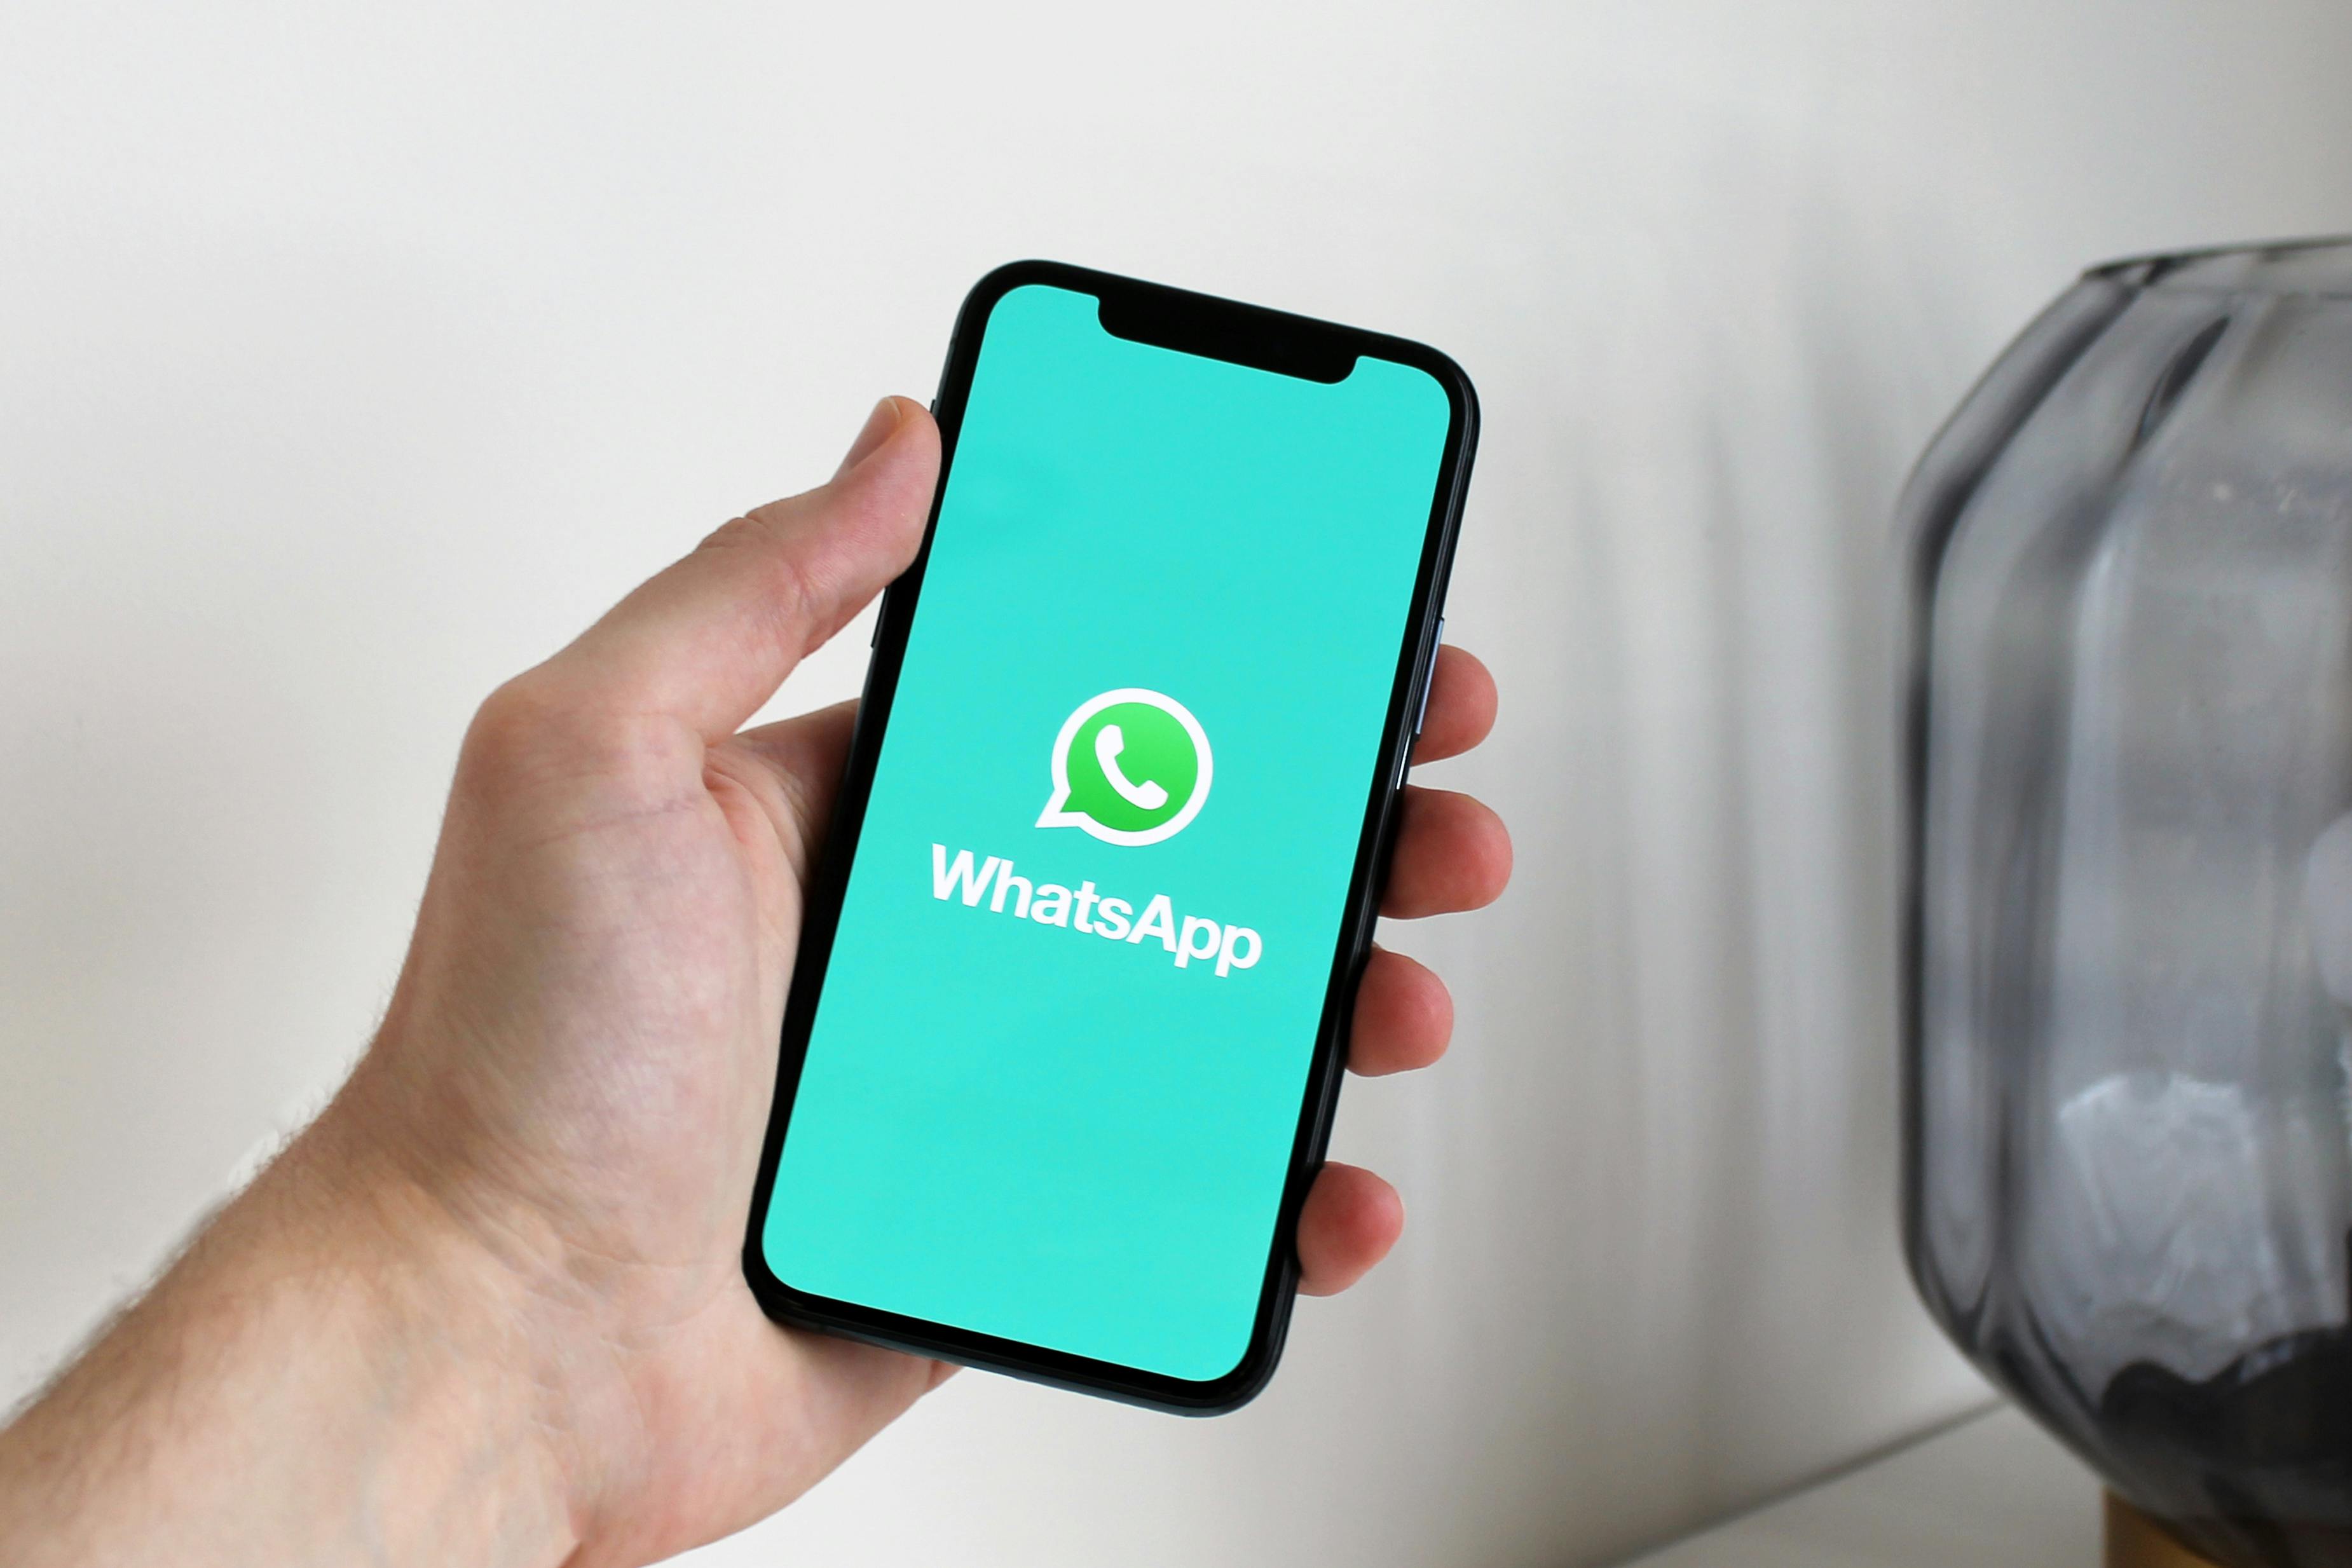 WhatsApp application on cellphone screen